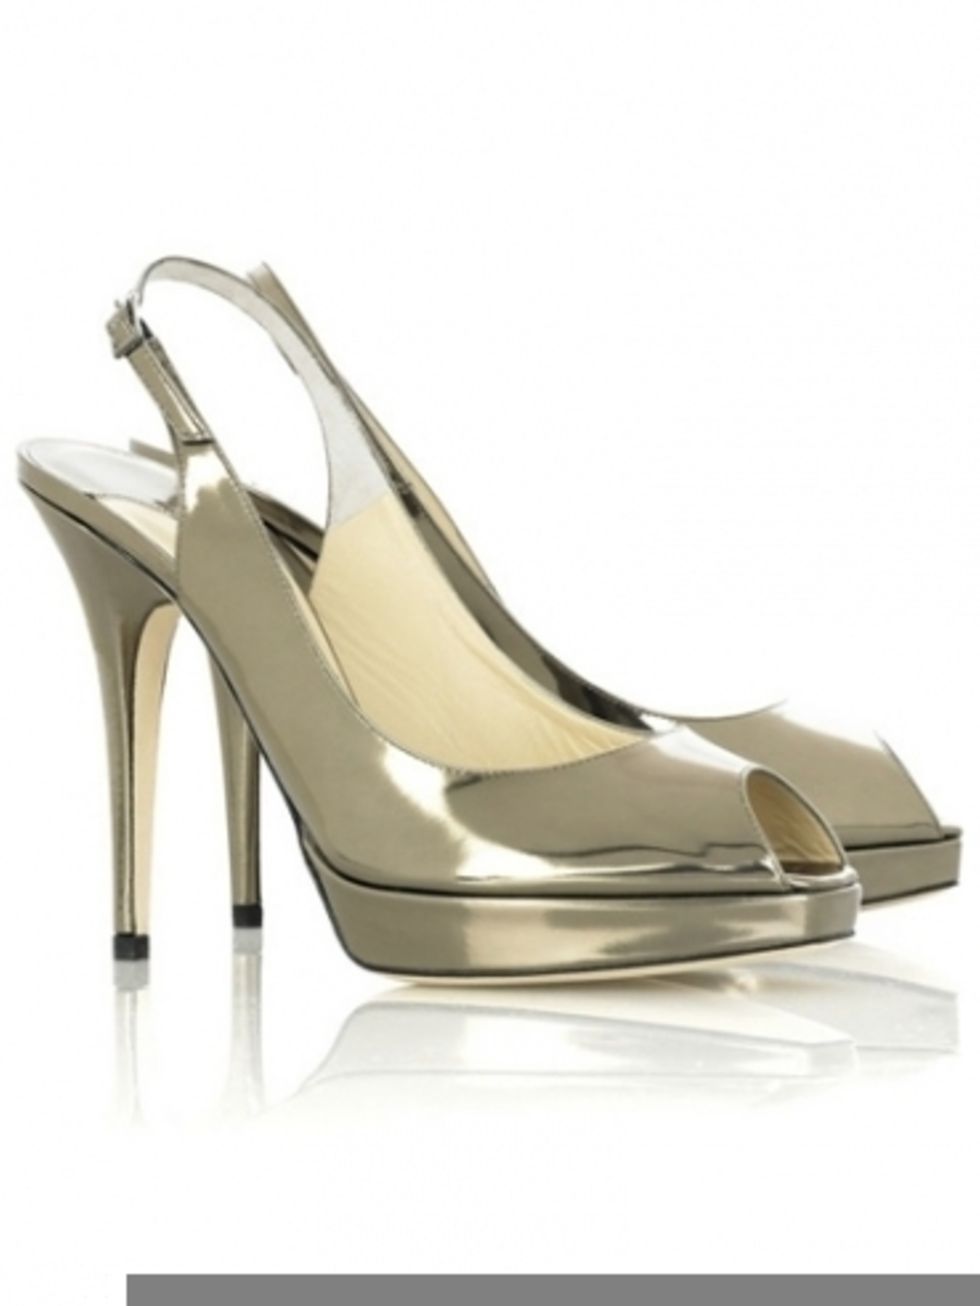 Footwear, High heels, White, Basic pump, Tan, Sandal, Beige, Material property, Bridal shoe, Fashion design, 